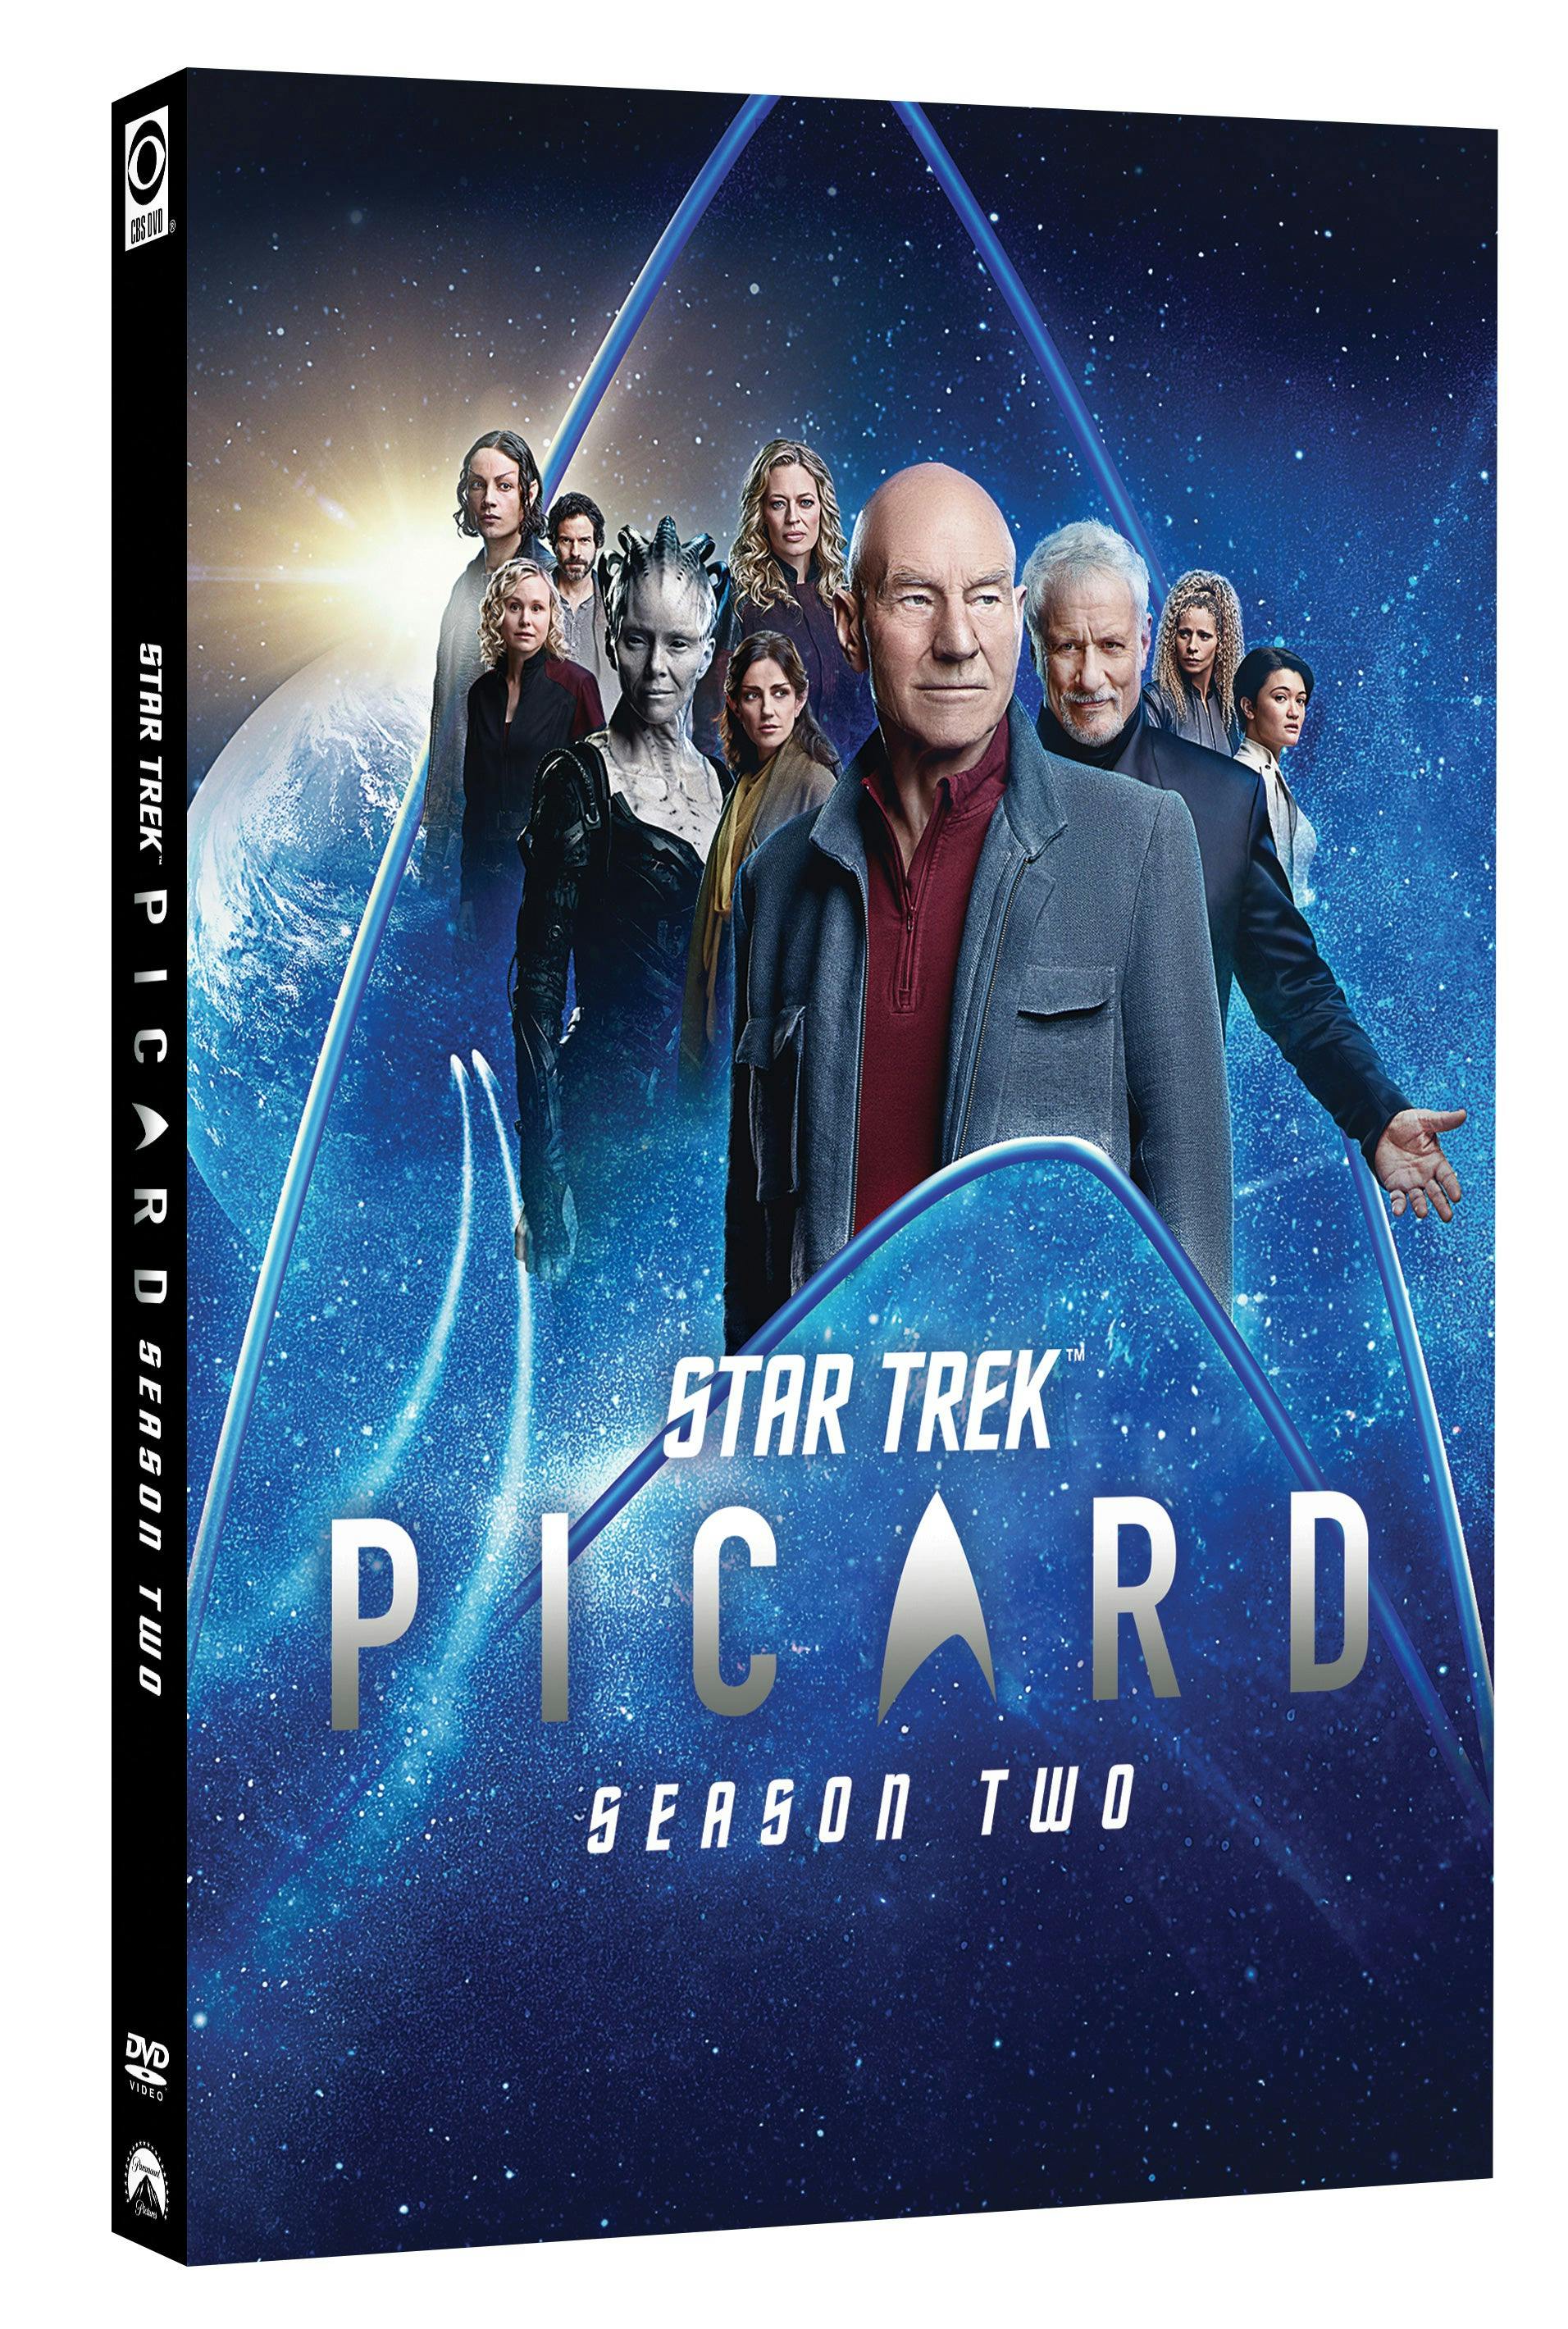 Star Trek: Picard - Season 2 DVD box art